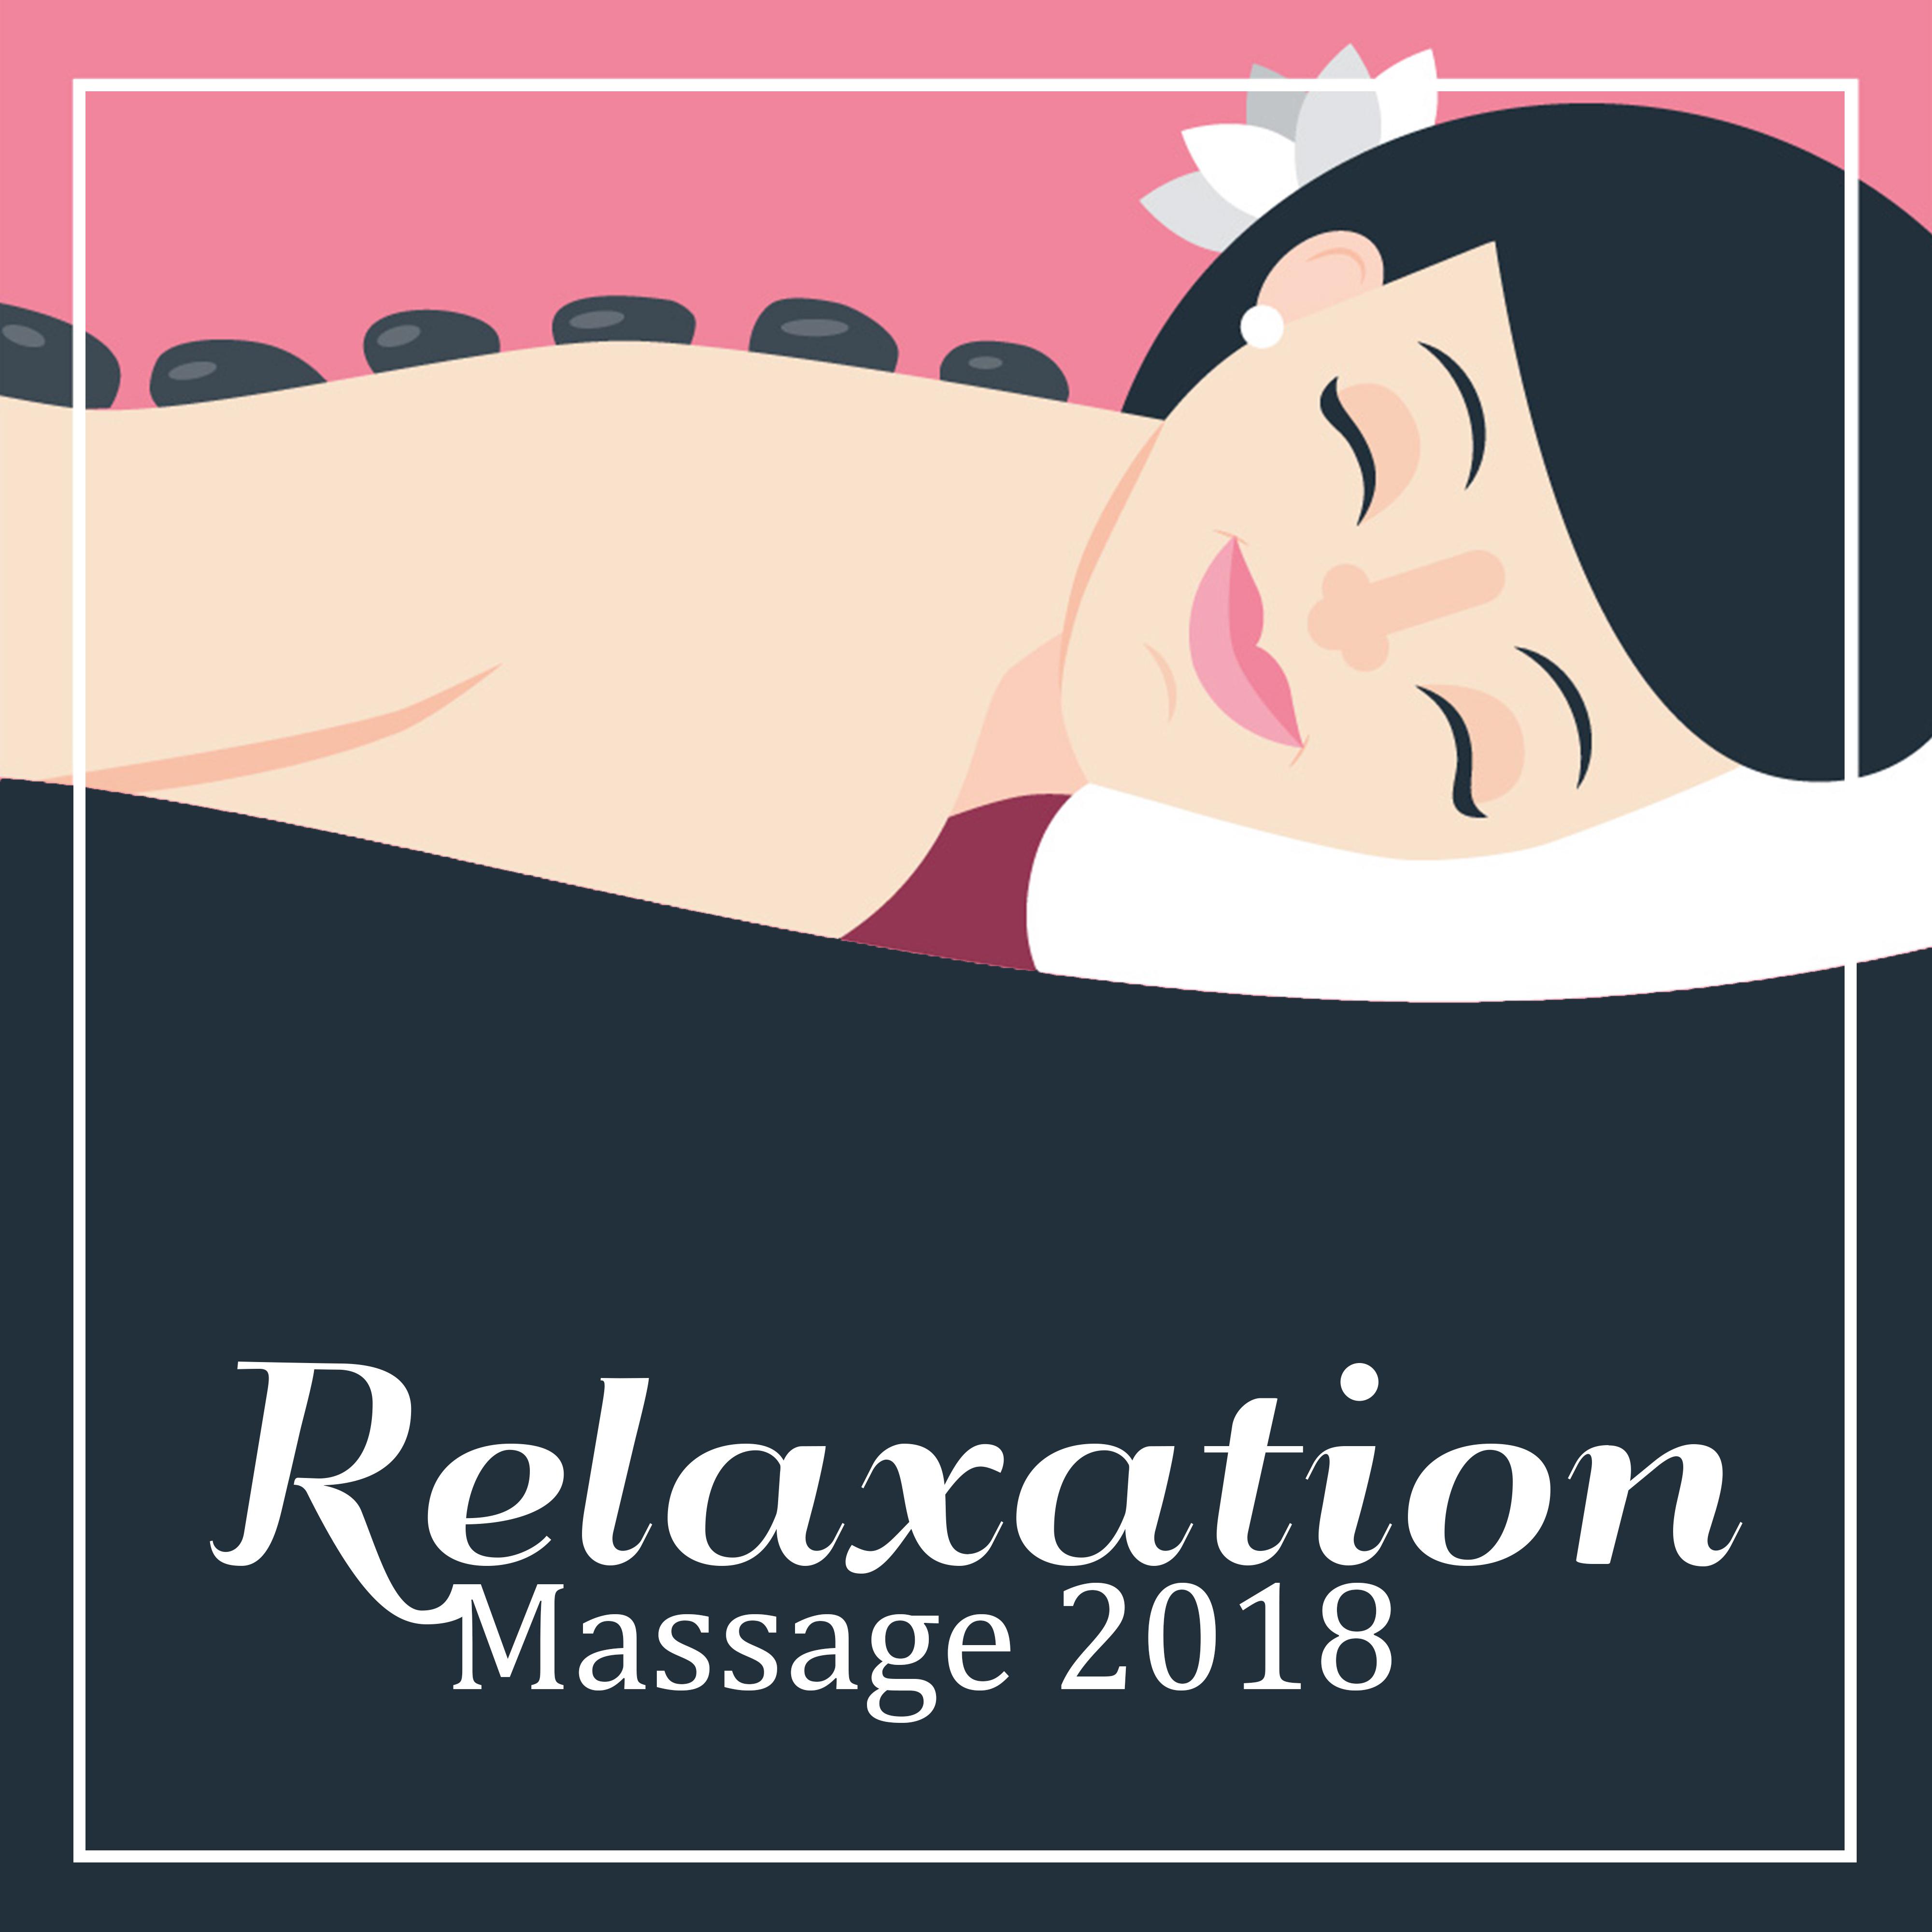 Relaxation Massage 2018